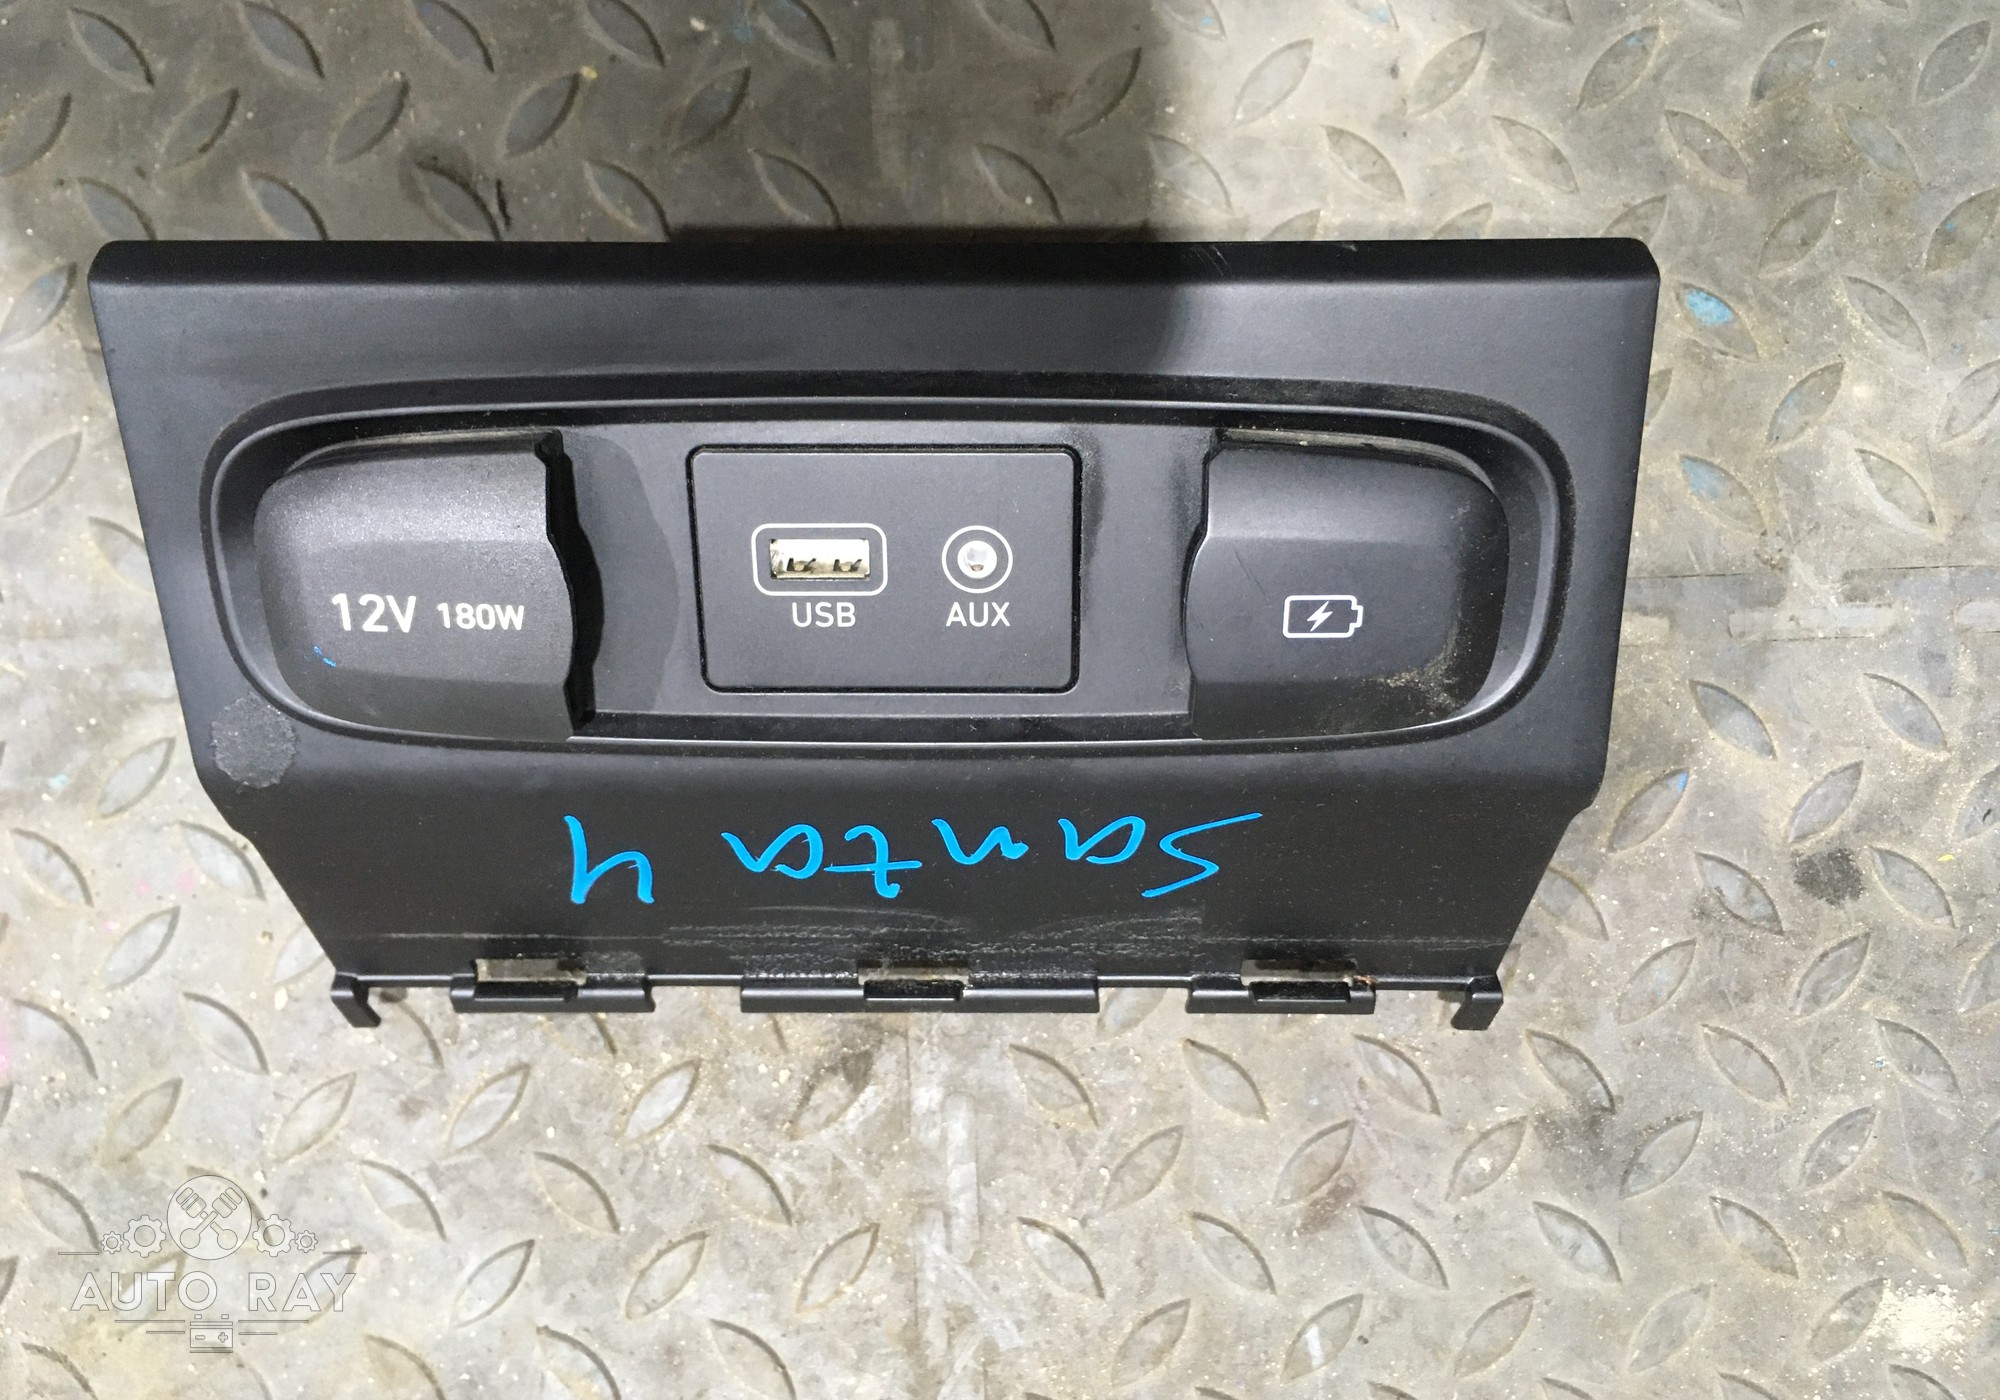 96120S1100 Разъем USB / AUX + накладка для Hyundai Santa Fe IV (с 2018)